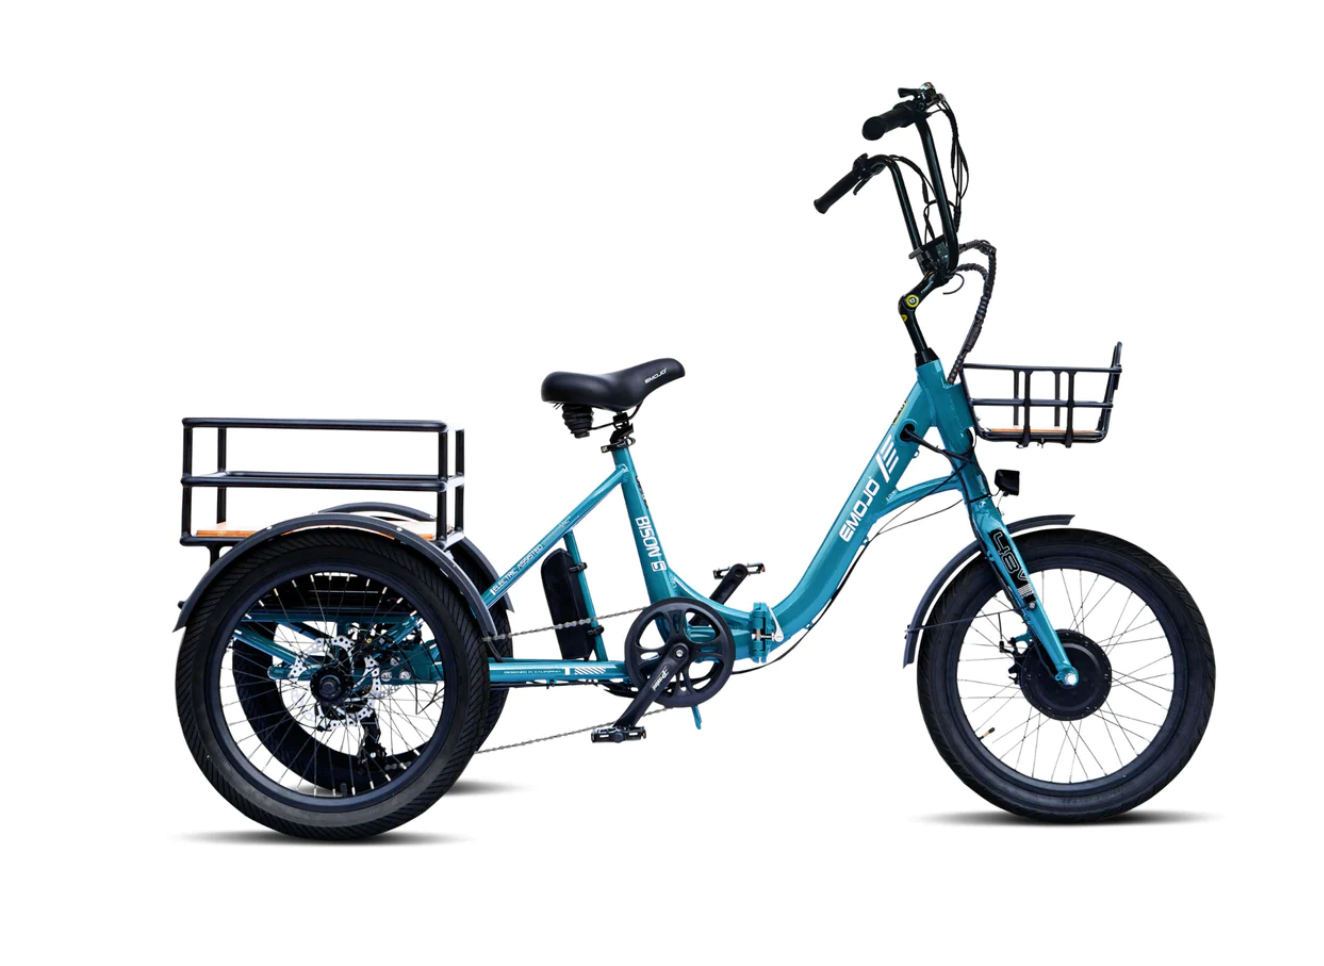 Emojo Bison S Folding Electric Trike Bike BONUS GIFT